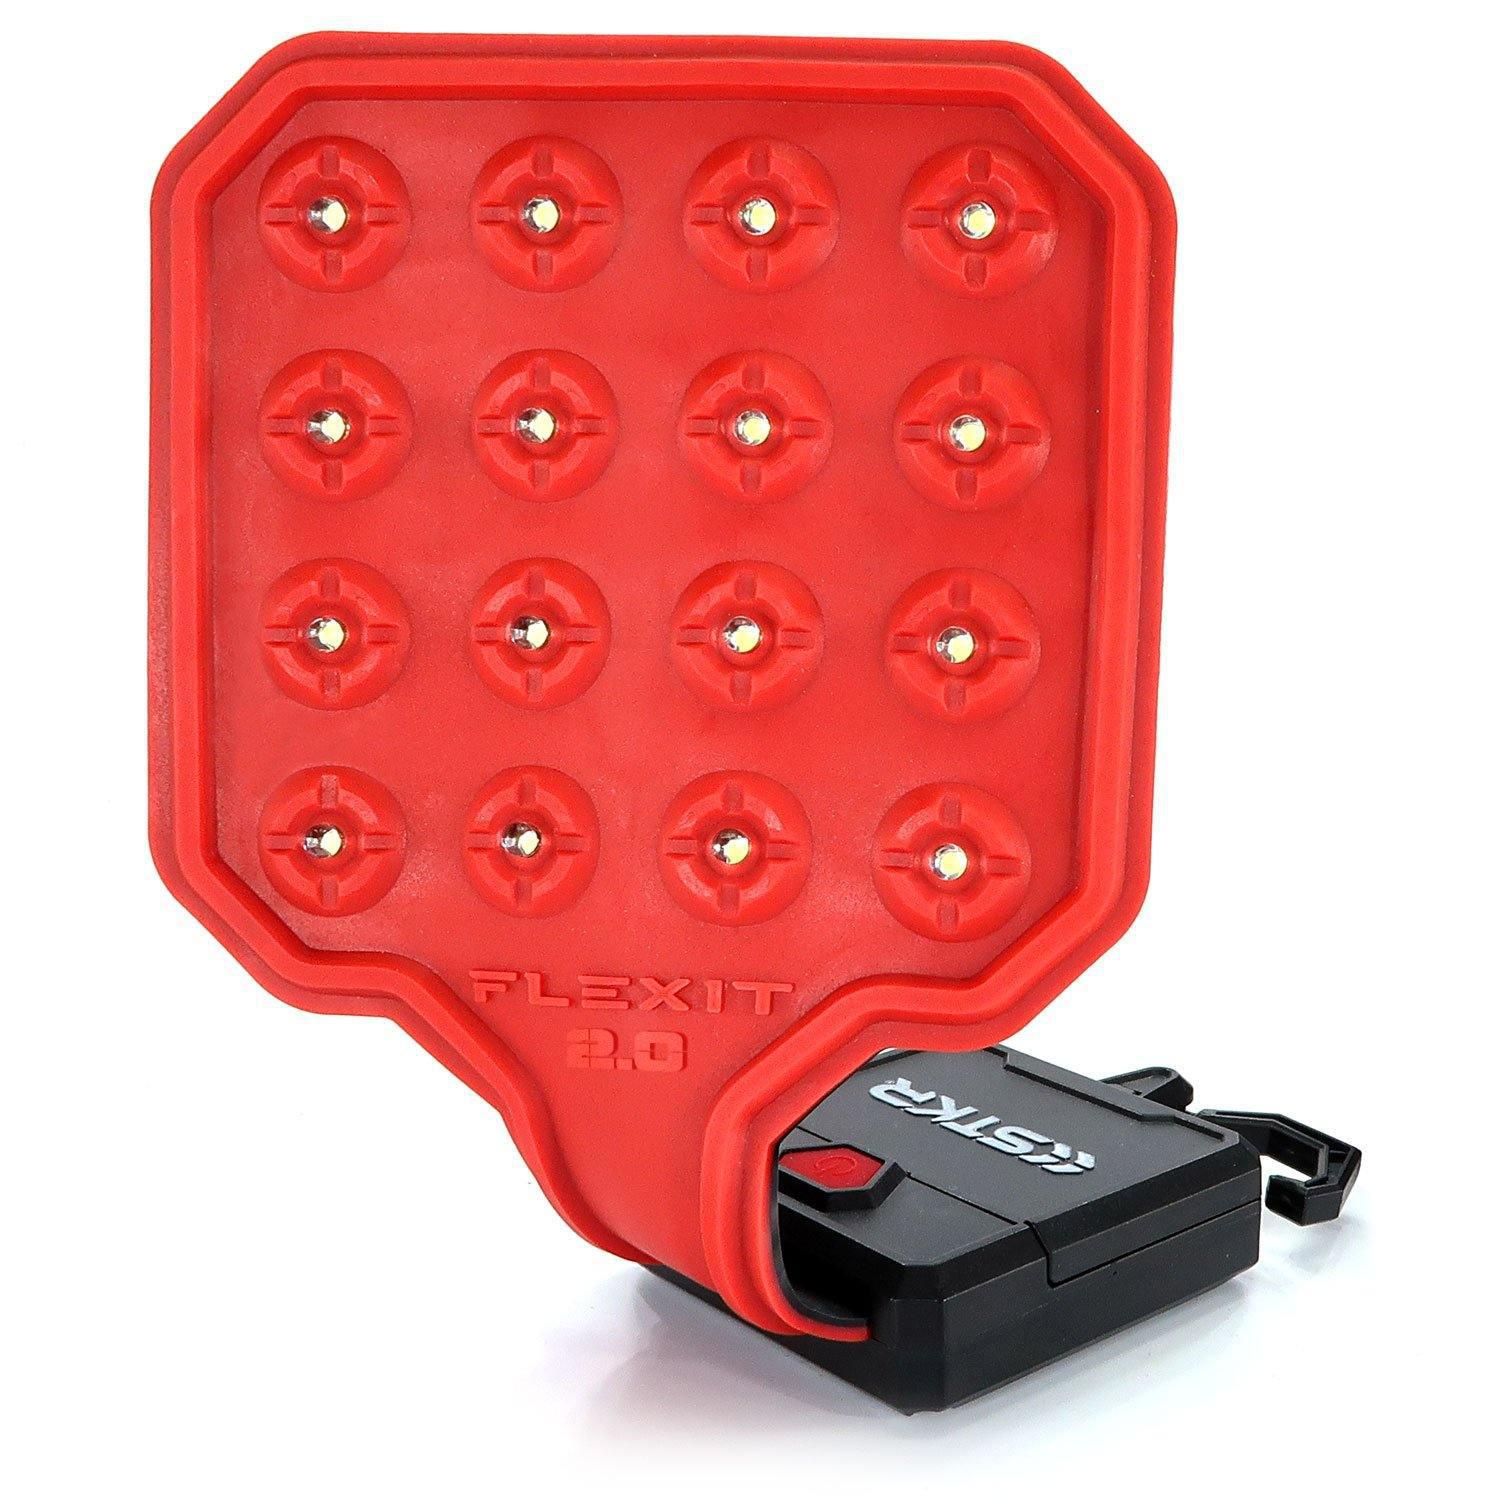 FLEXIT 2.0 - Flexible LED flashlight/lantern - aim light where you need it by STKR Concepts